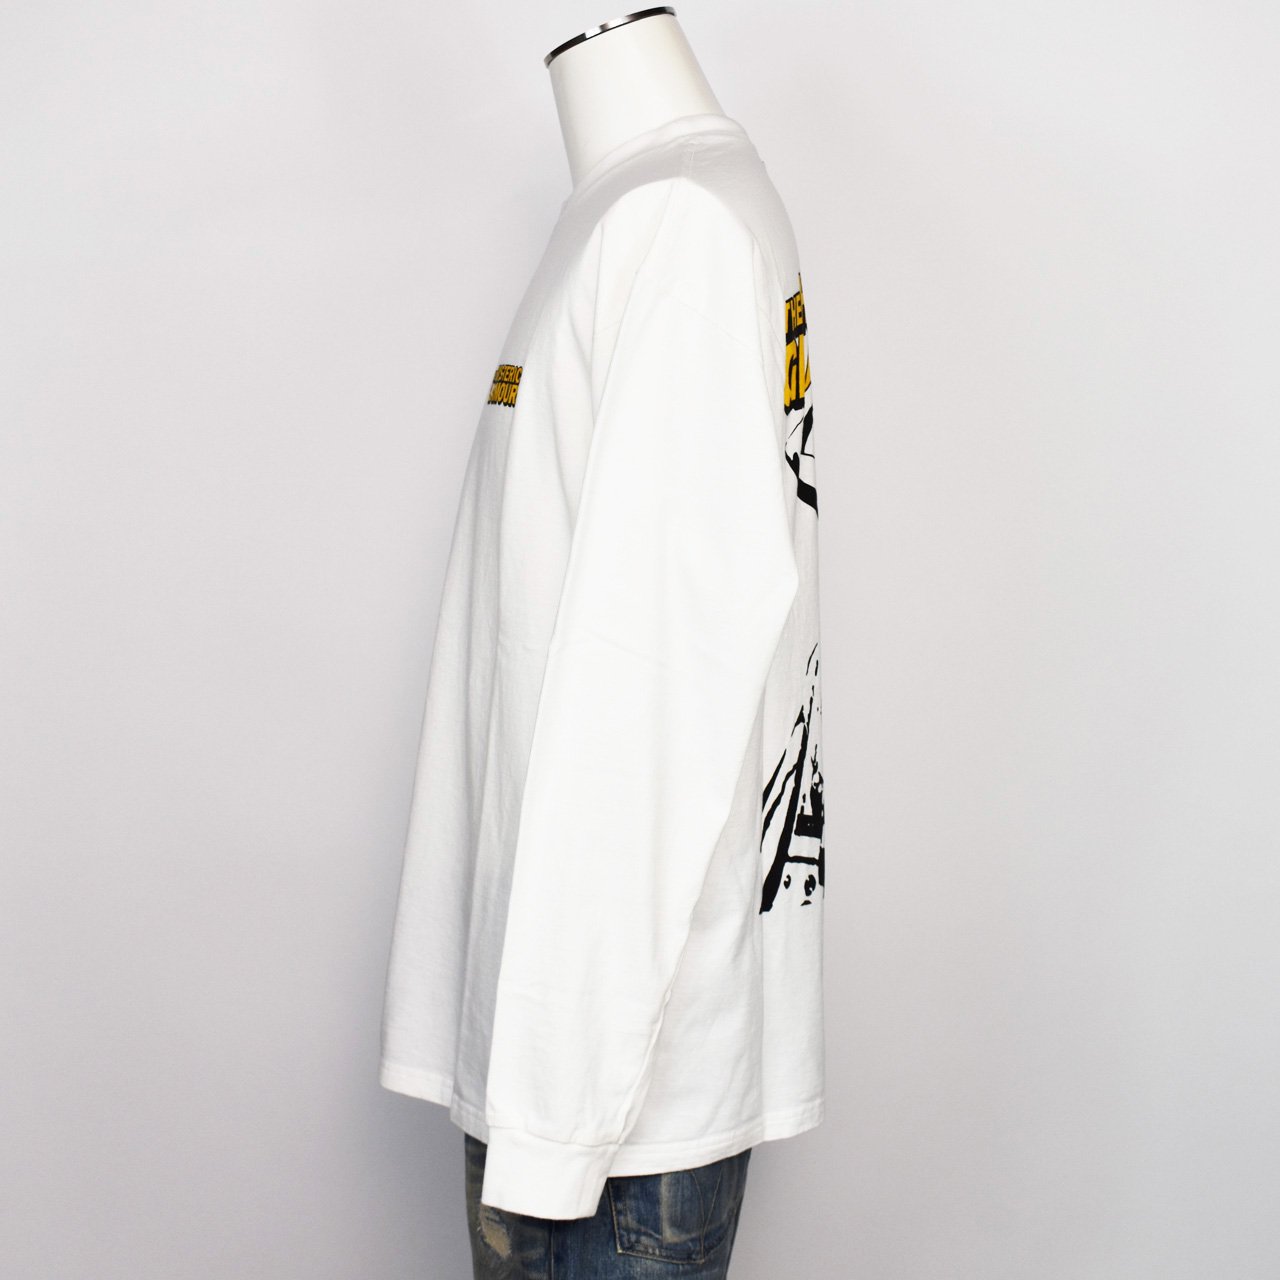 HYSTERIC GLAMOUR(ヒステリックグラマー)23FW/秋冬
REEL TO REEL Tシャツ ホワイト